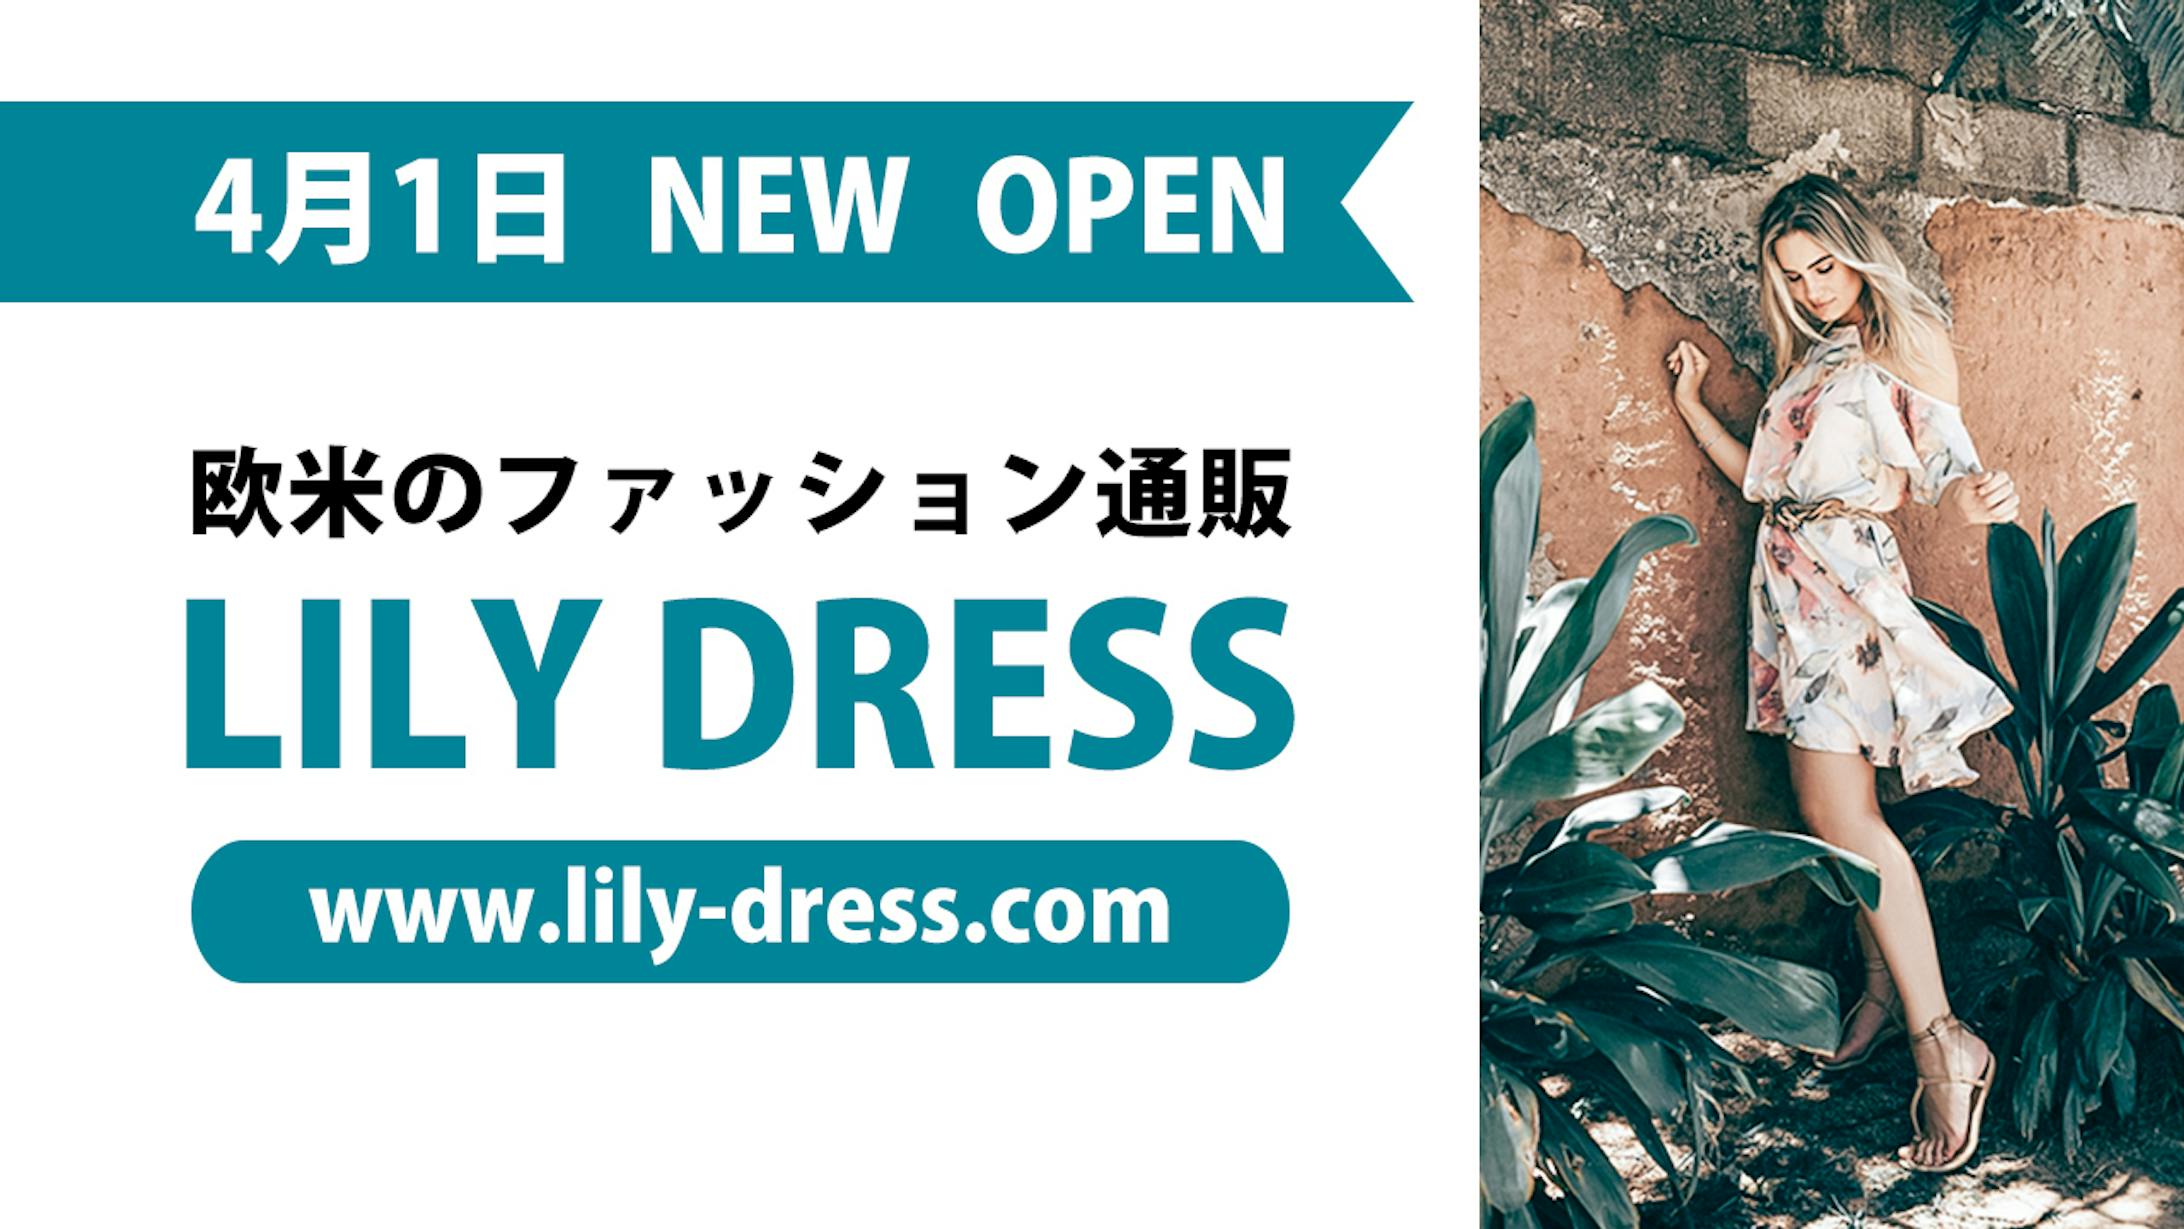 LILY DRESS・欧米のファッション通販 NEW OPEN-2